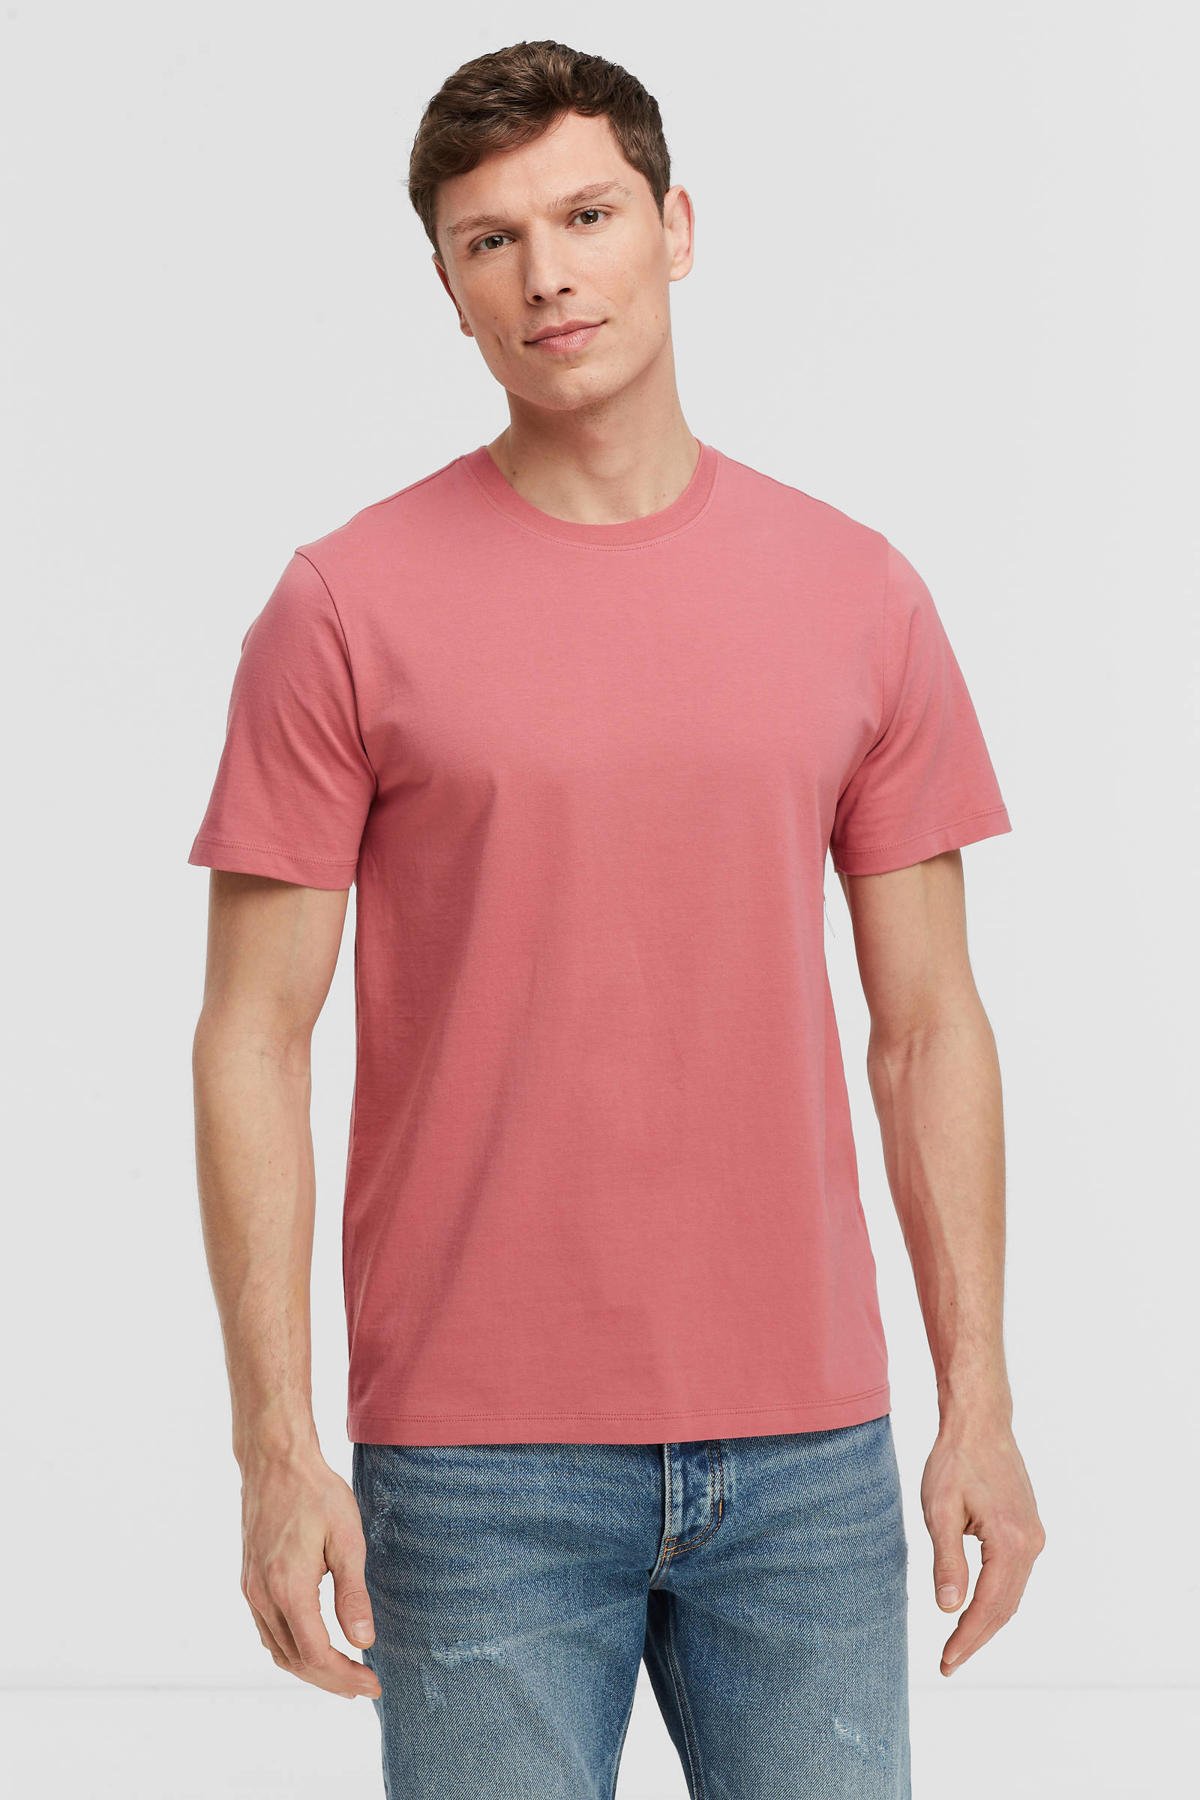 kant verontschuldiging Afgeschaft anytime T-shirt roze | wehkamp